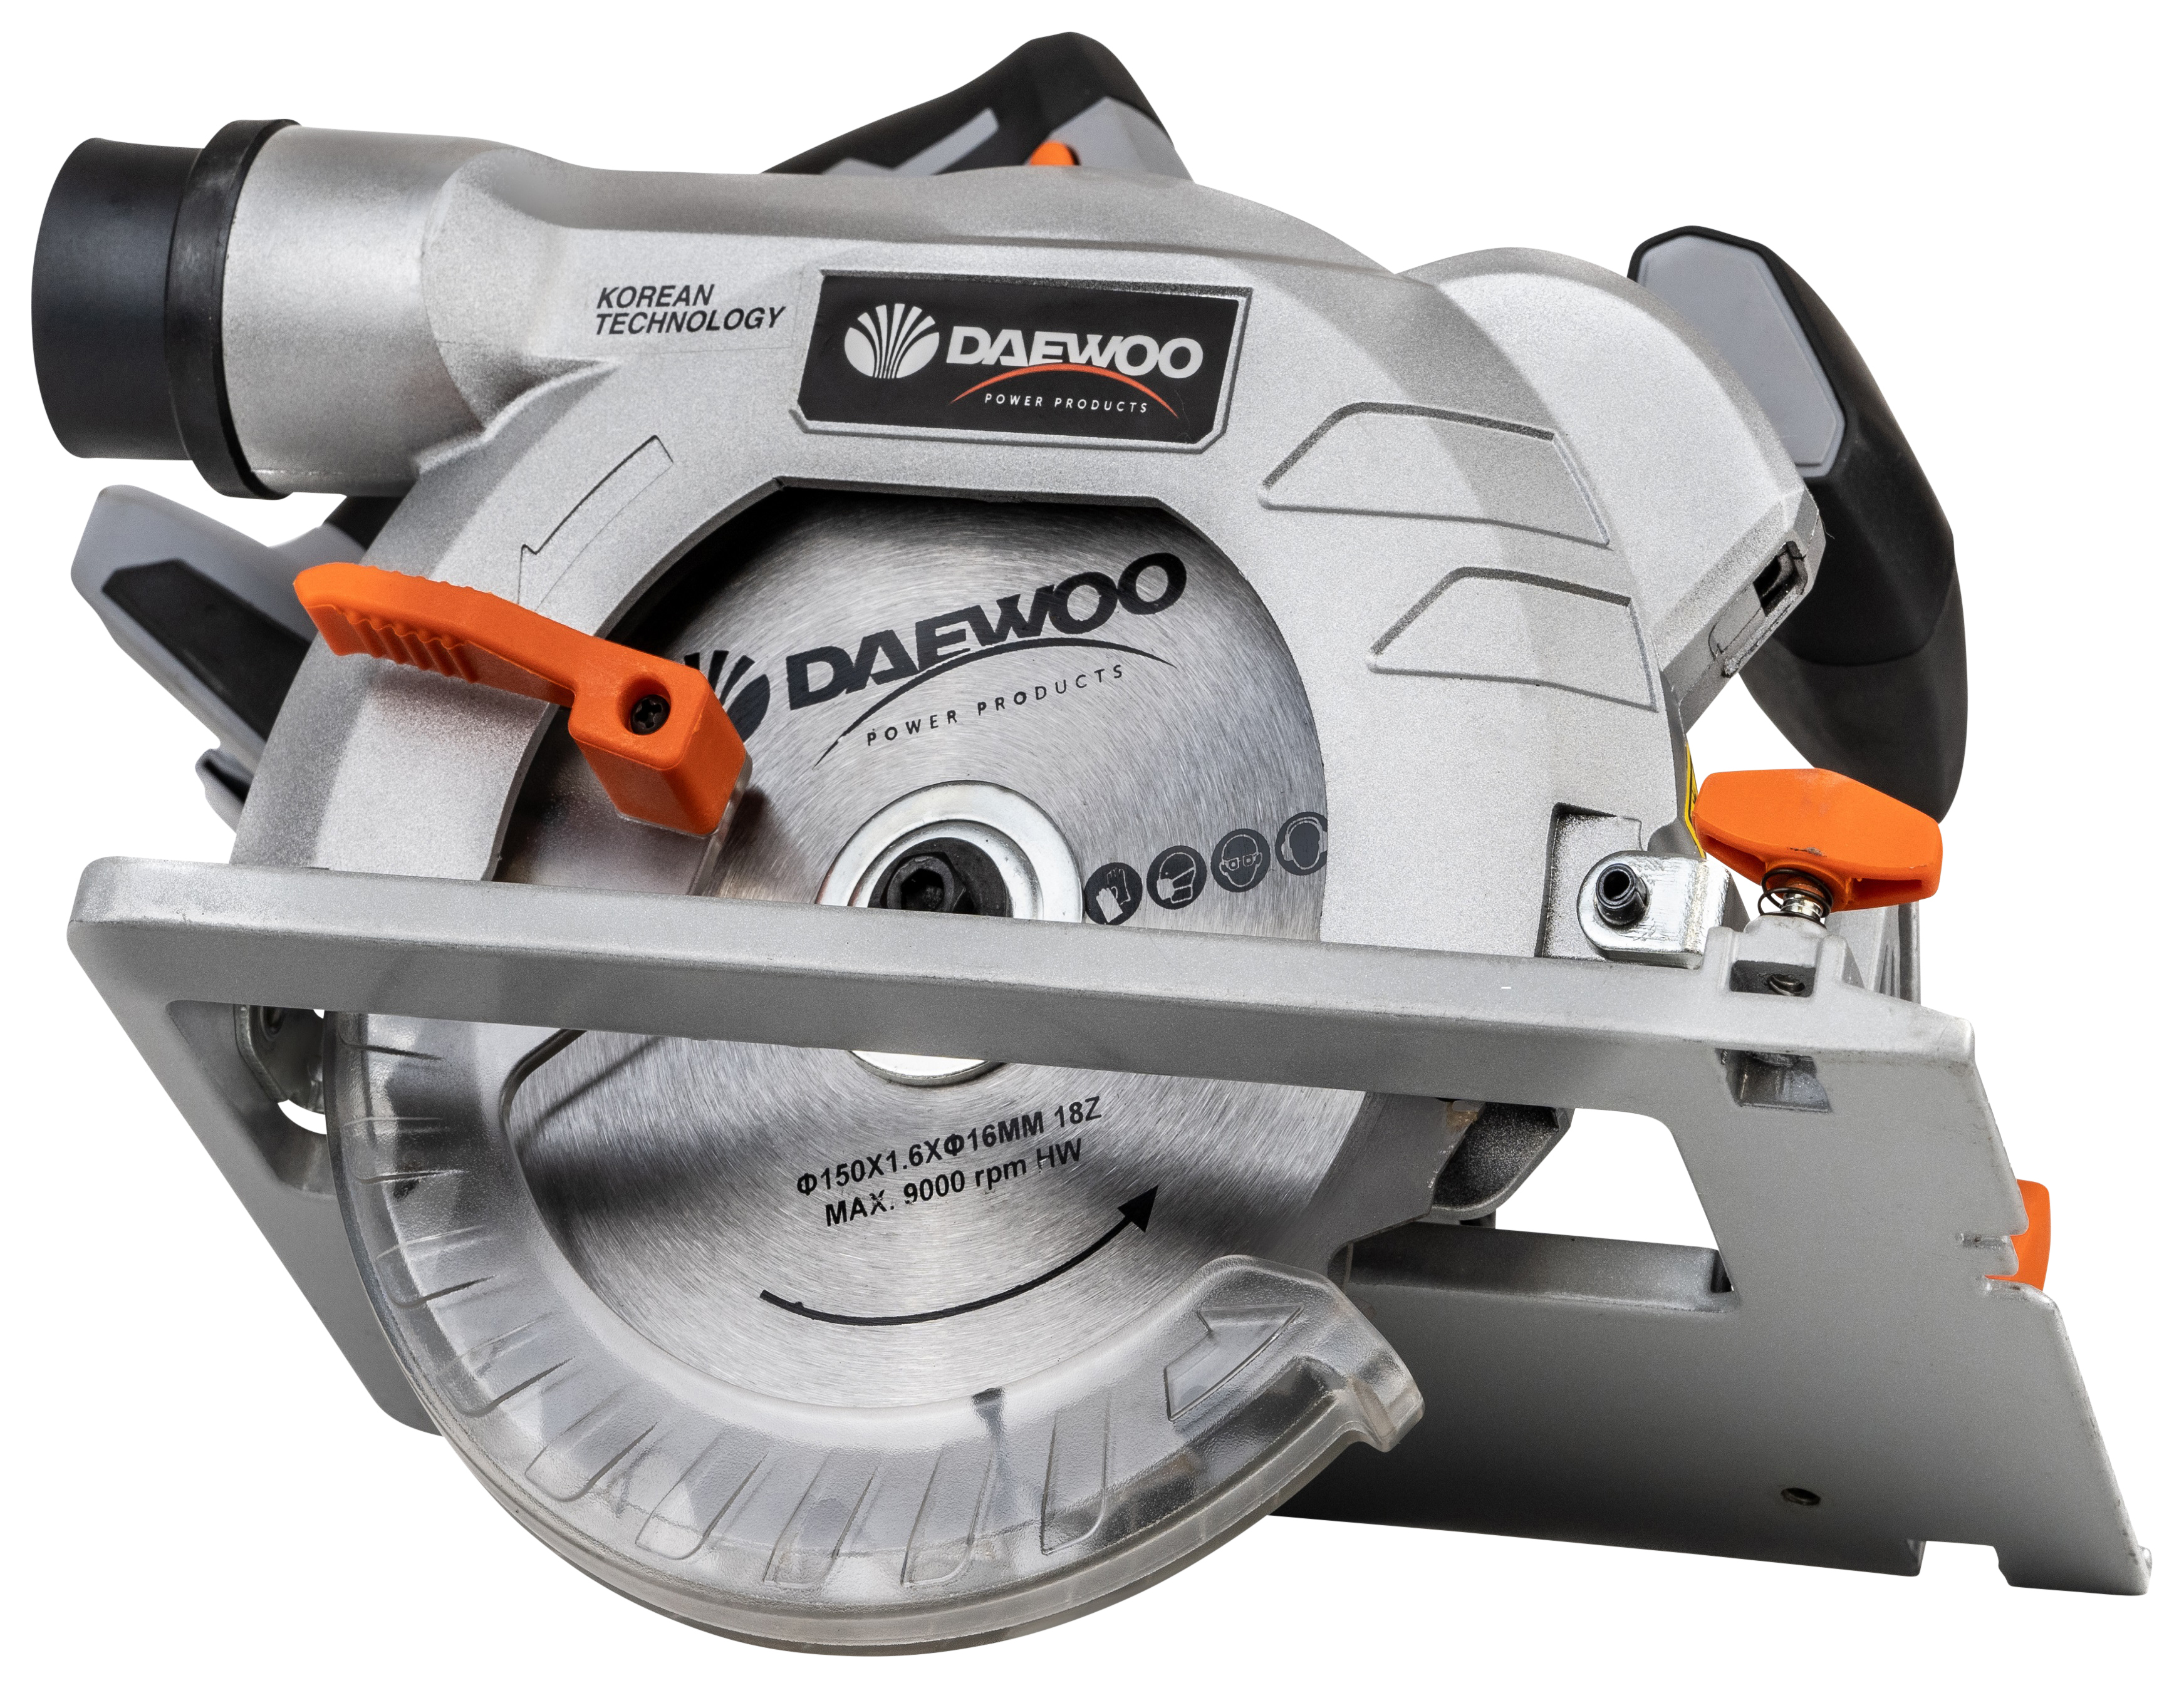 Daewoo DALCS18-1-4B1C1 U-Force Li-ion 1 x 4.0Ah Cordless 150mm Circular Saw - 18V